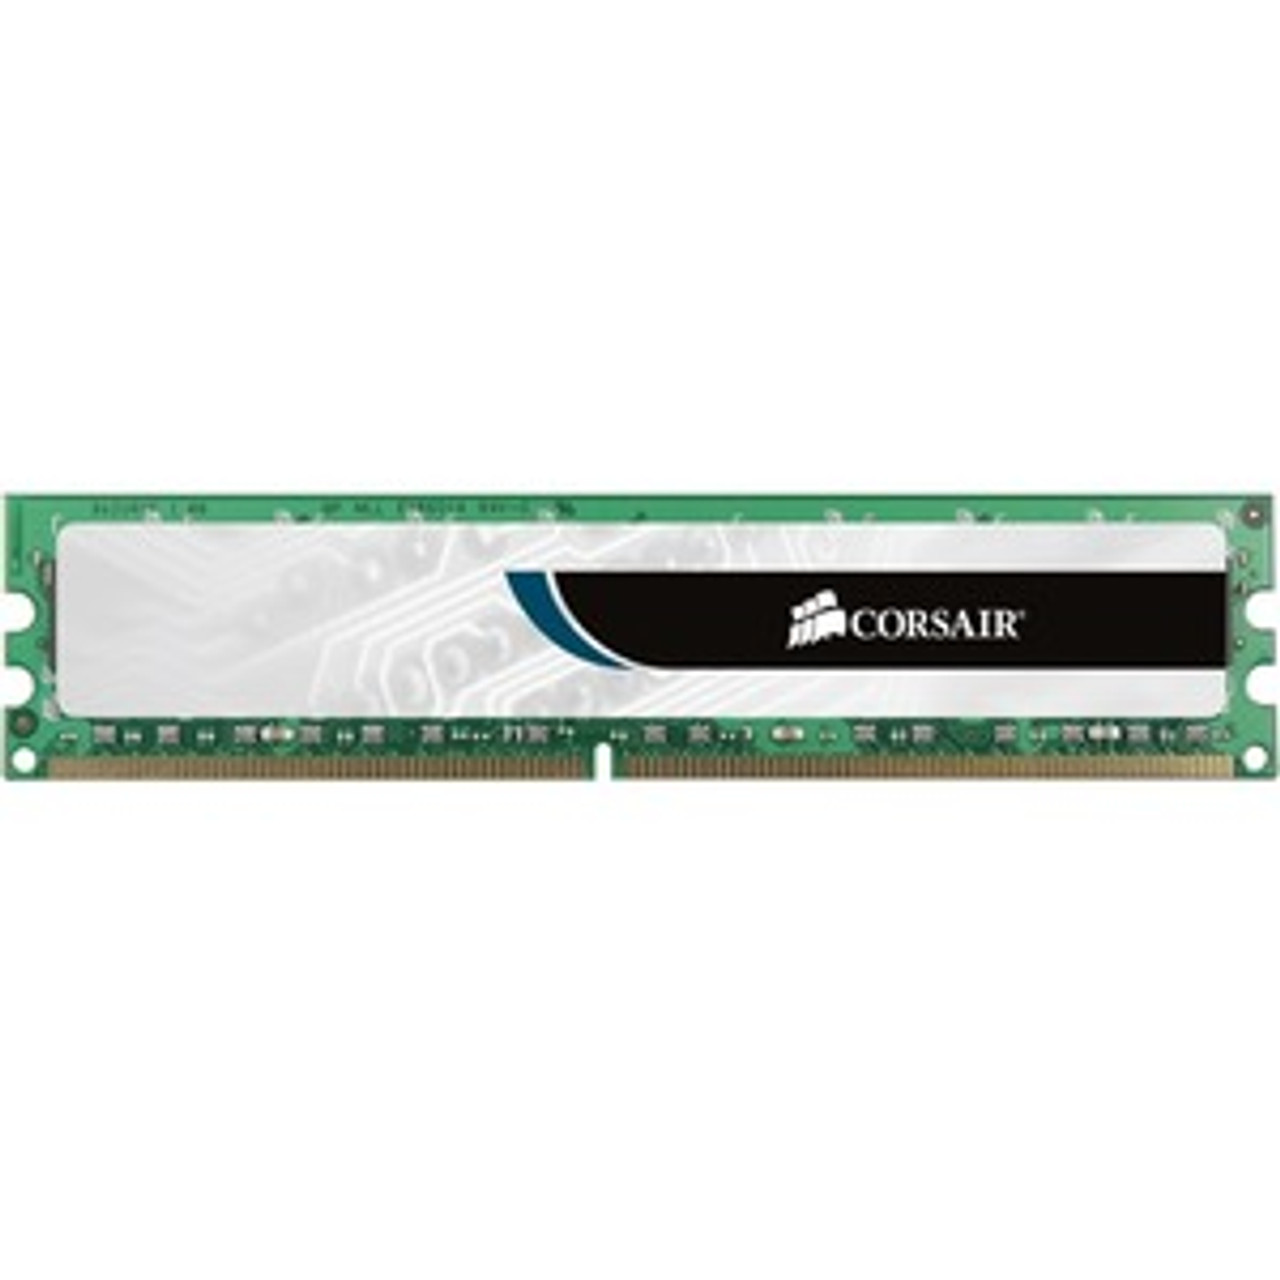 Corsair 2GB DDR3 SDRAM Memory Module - 2GB (1 x 2GB) - 1333MHz DDR3-1333/PC3-10666 - Non-ECC - DDR3 SDRAM - 240-pin DIMM UNBUFF